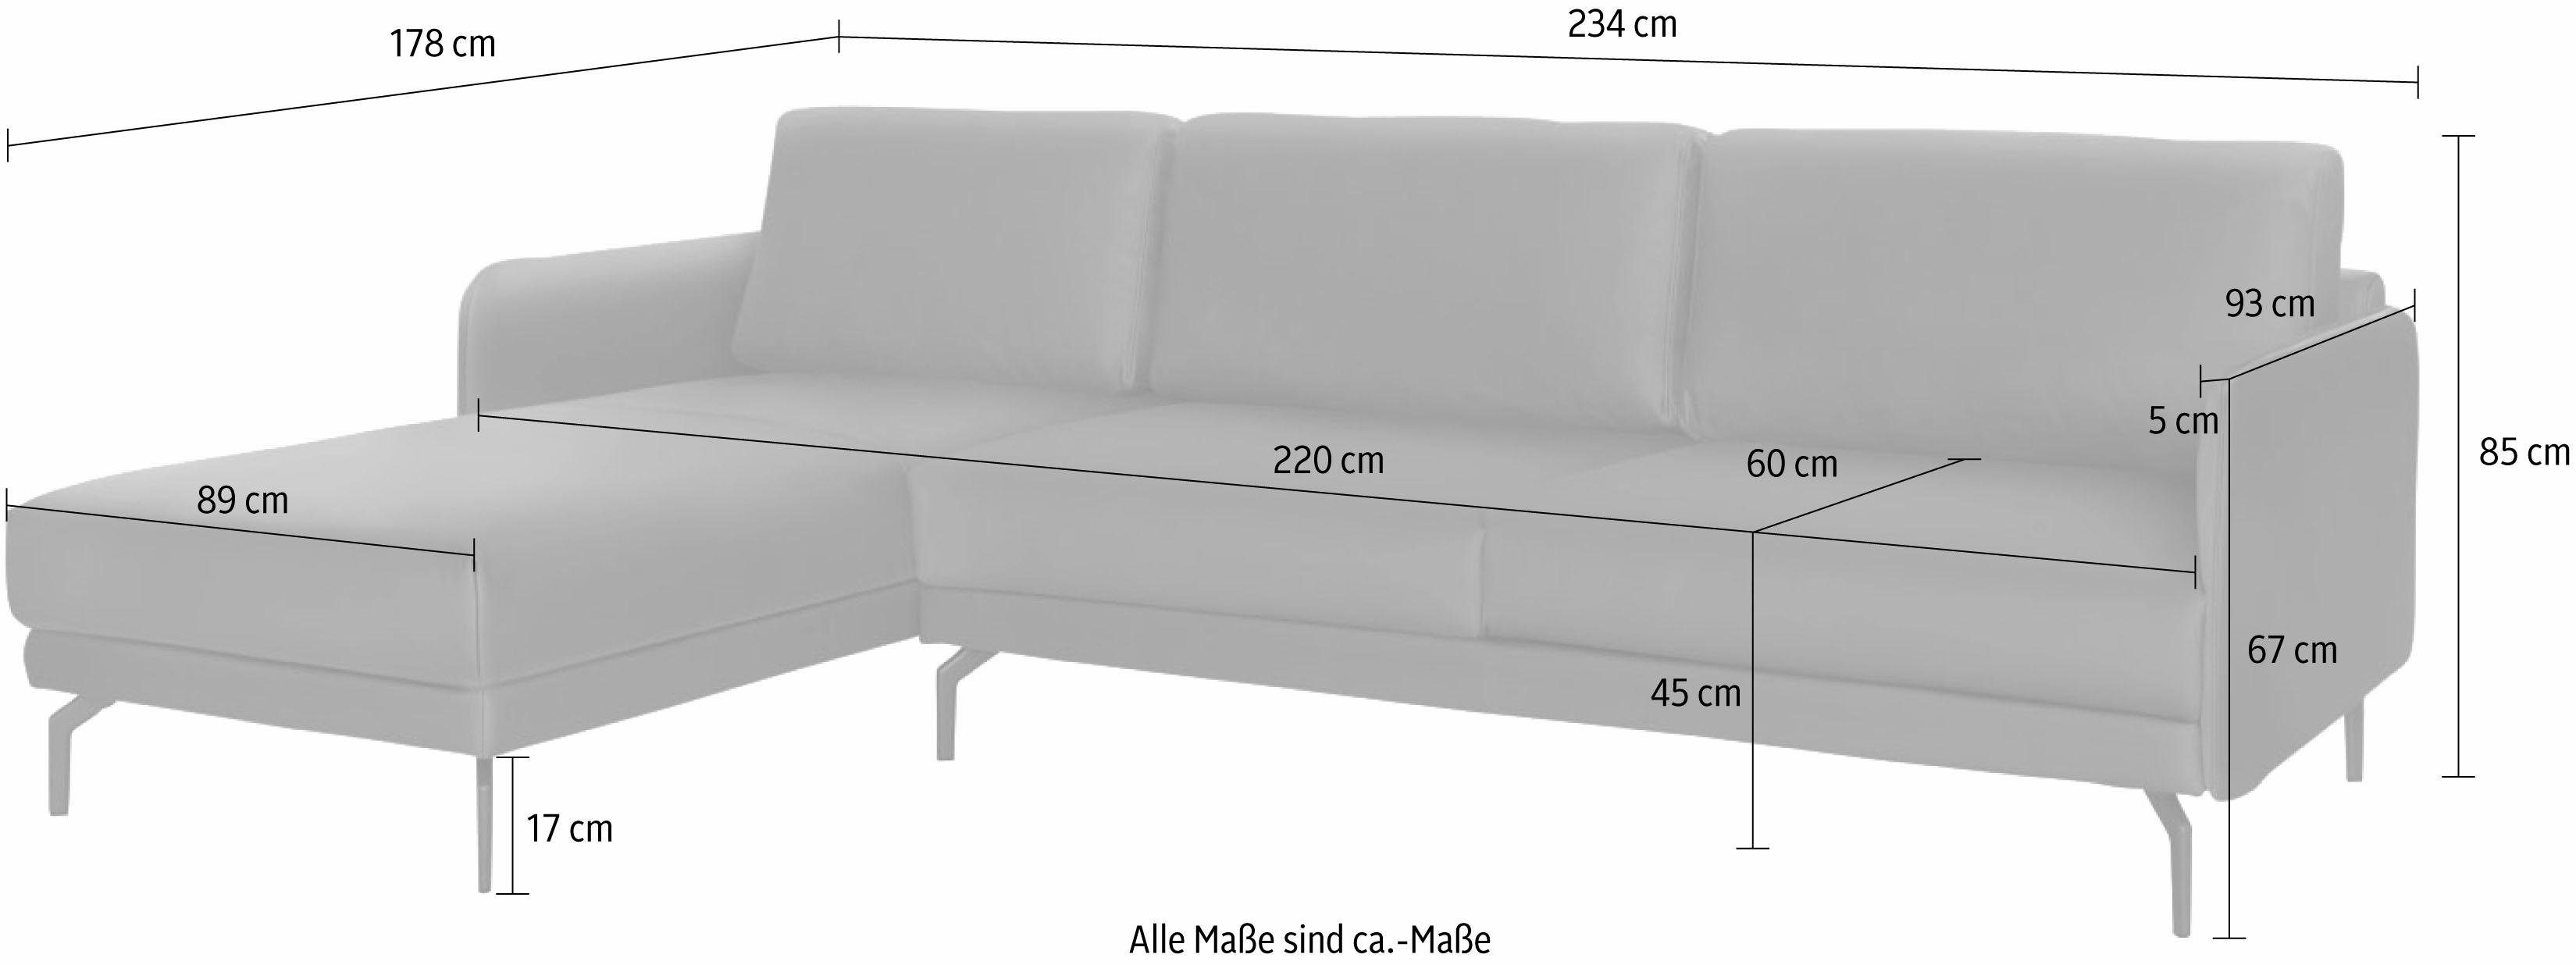 Ecksofa umbragrau schmal, hülsta sofa Breite cm, sehr Armlehne Alugussfüße hs.450, in 234